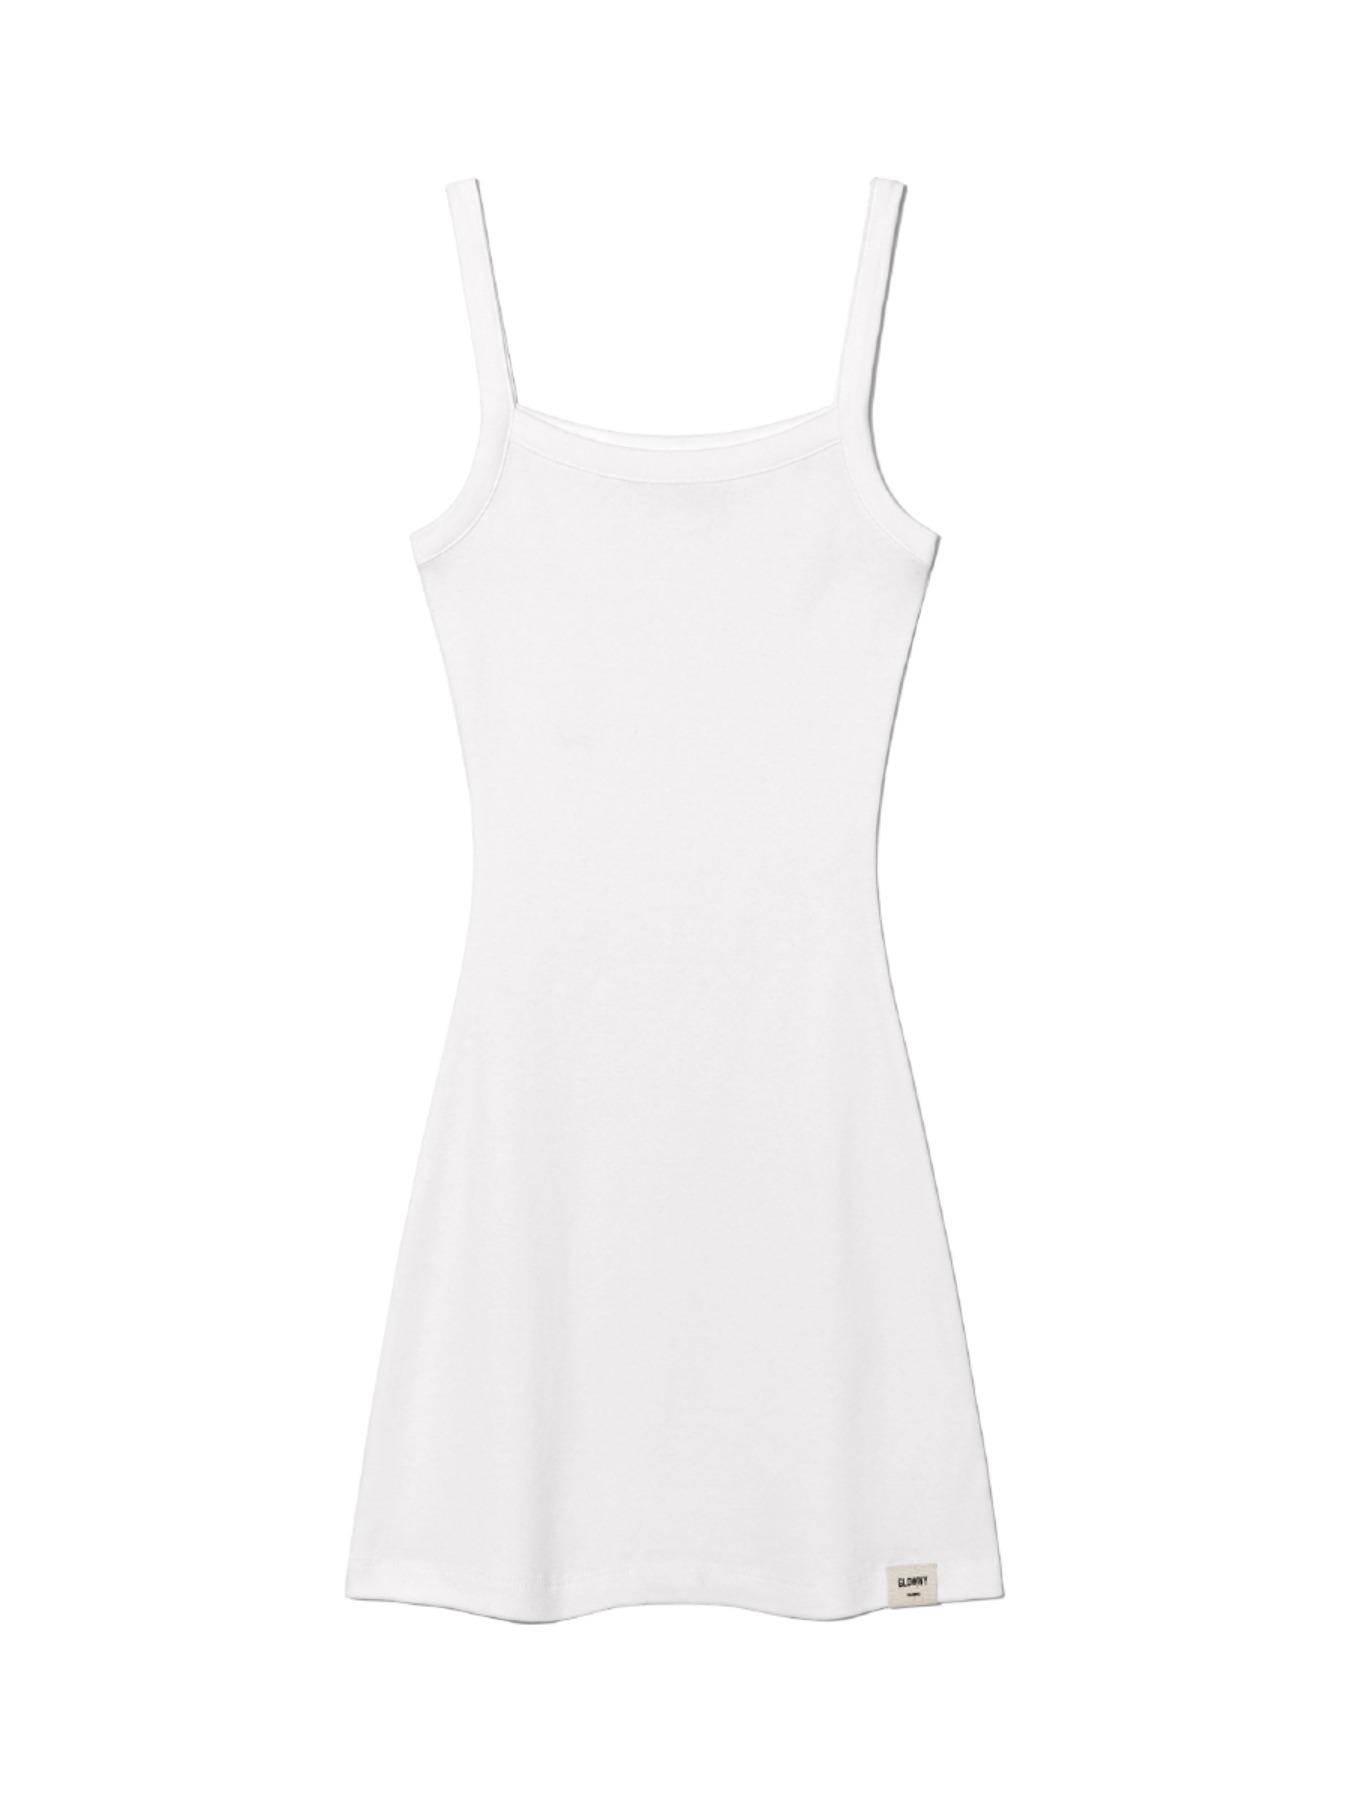 G CLASSIC TANK DRESS (WHITE)